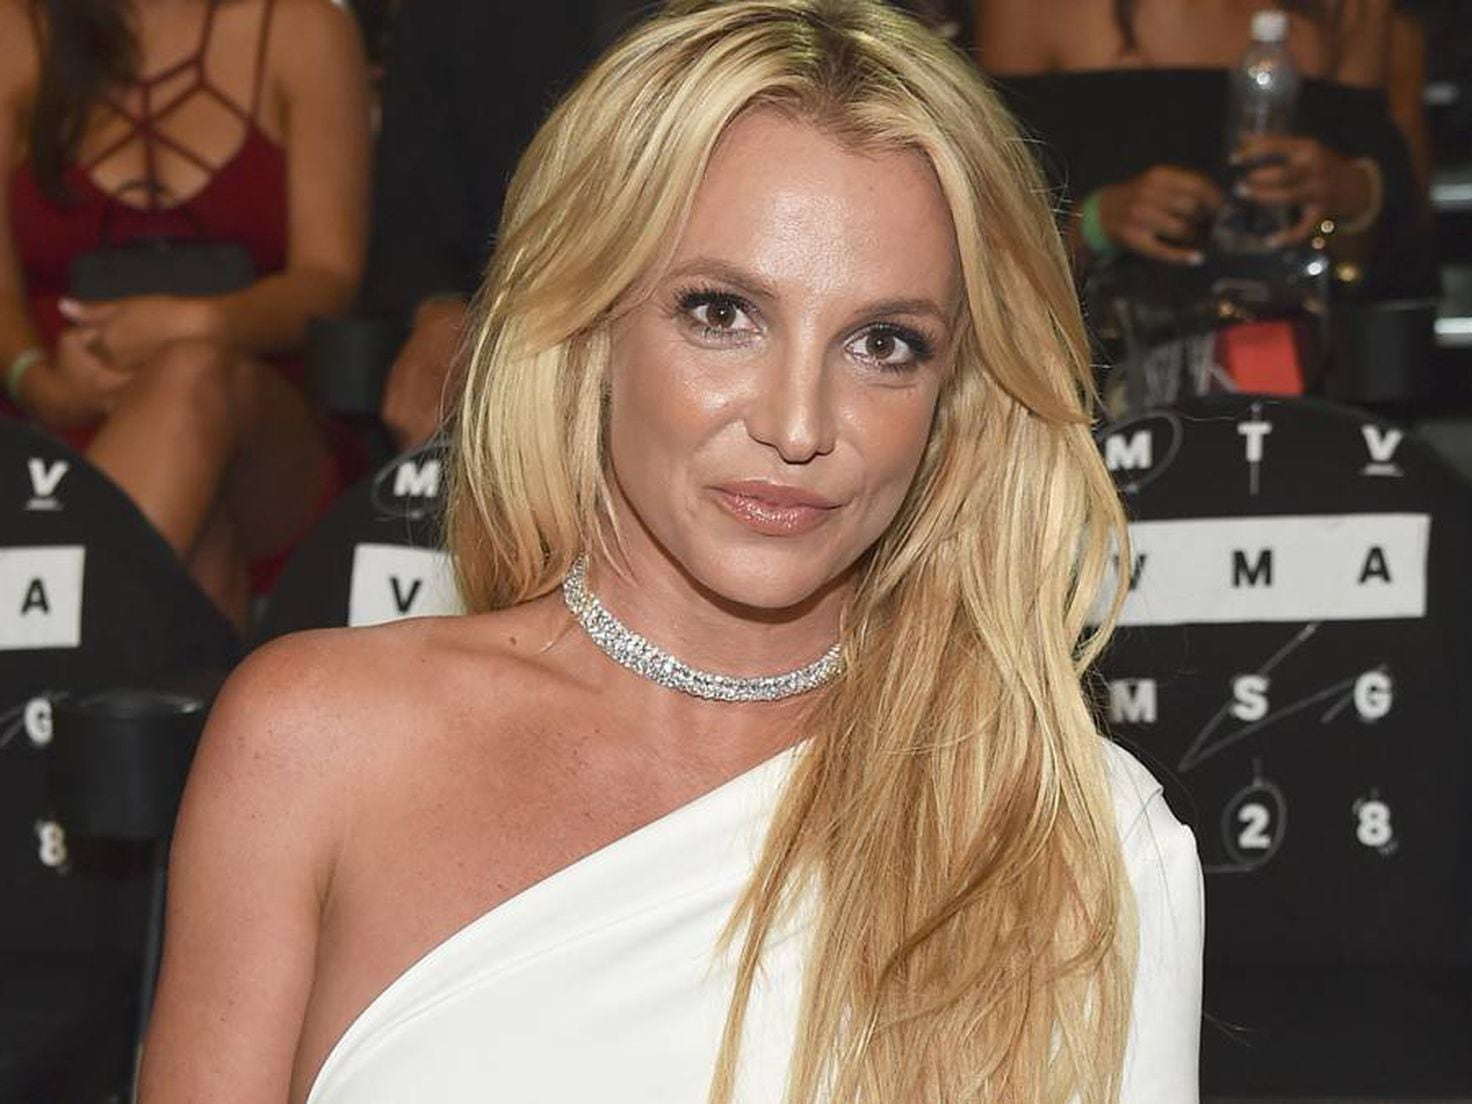 Video Porno De Britney Spears wash woman